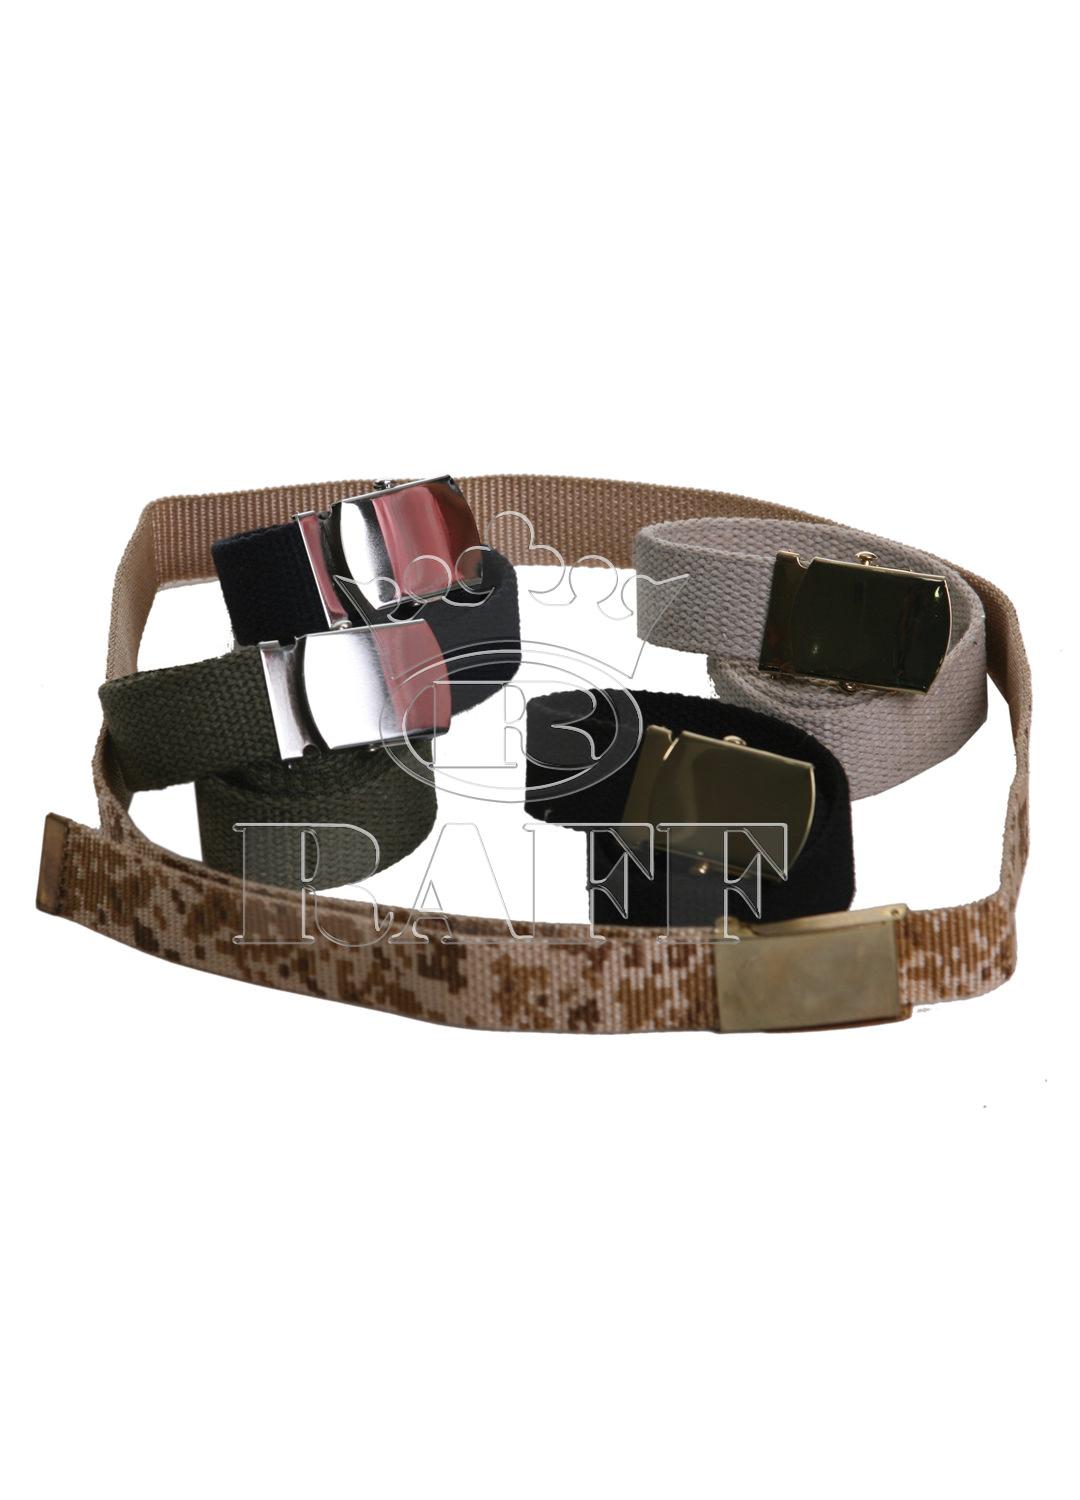 Soldier Belts